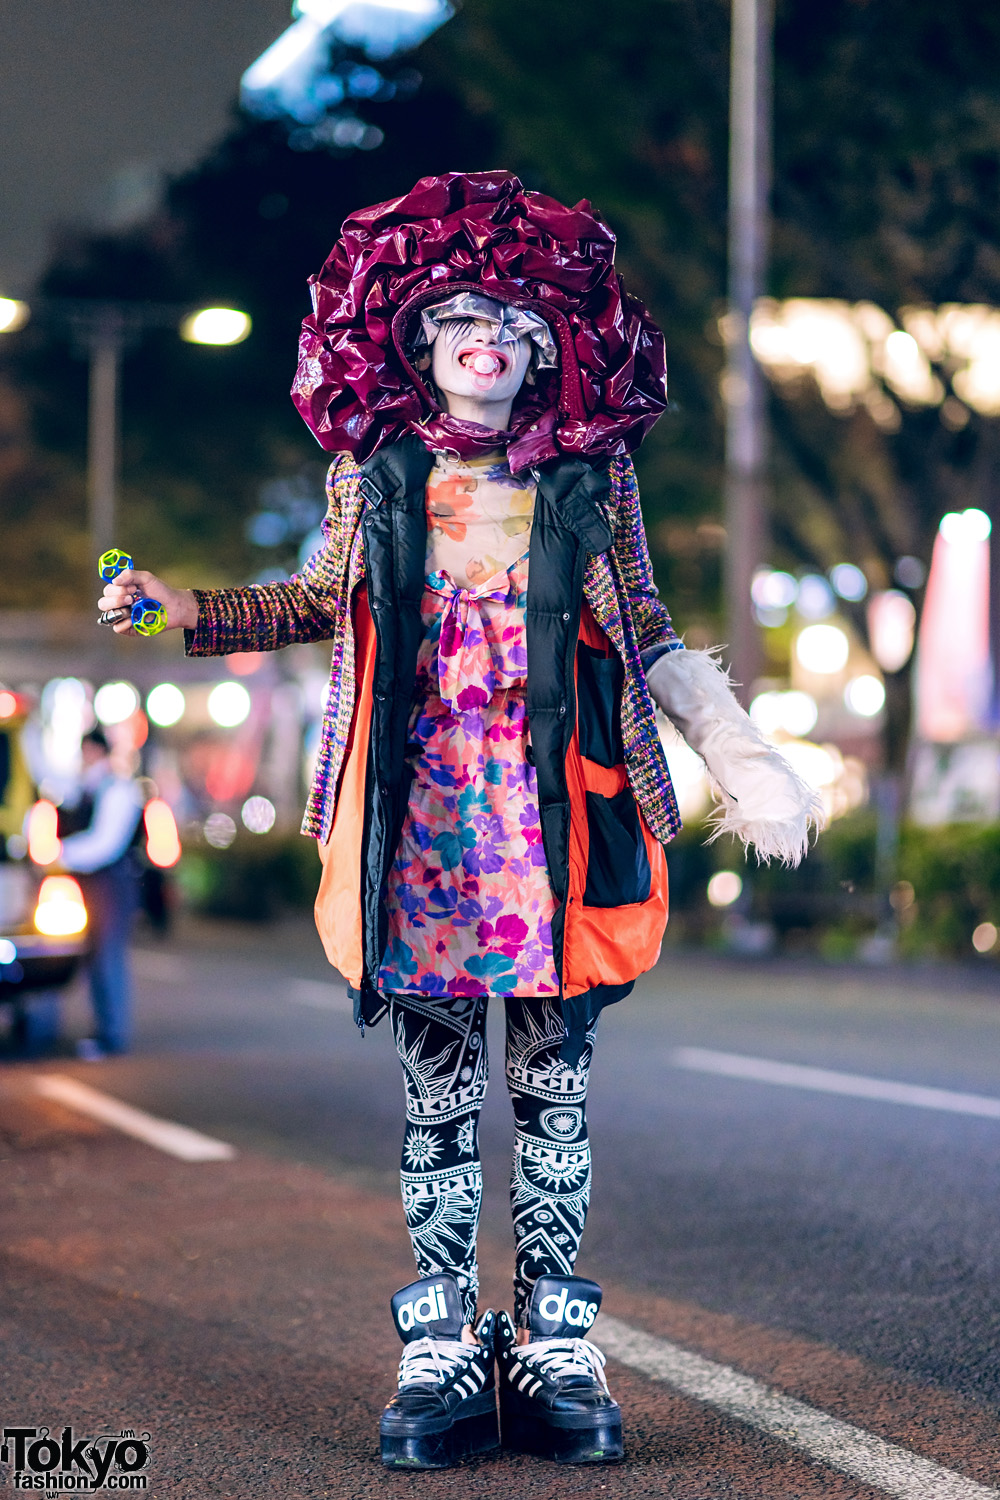 Harajuku Fashion Designer in Avant-Garde Streetwear Style w/ Layered Jackets, KTZ Leggings, Adidas Platform Sneakers & Statement Hat